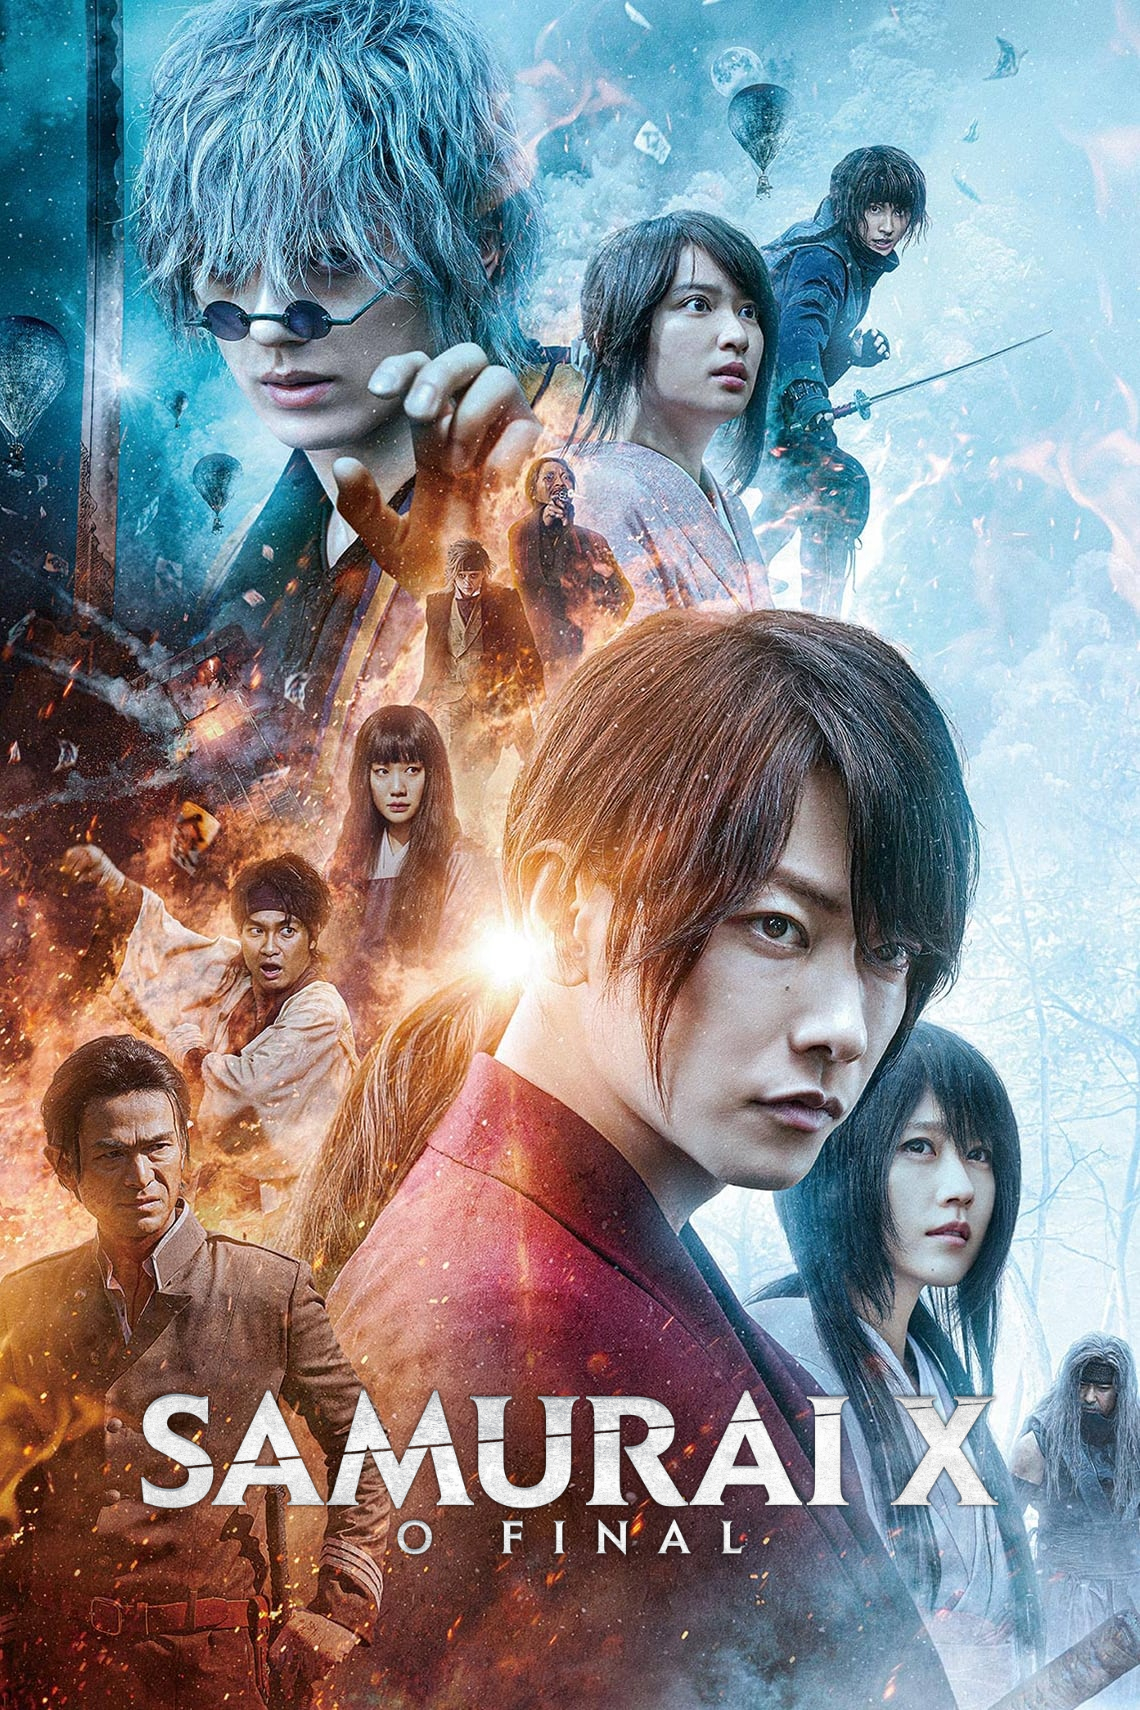 Blog Daileon: Samurai X sem dublagem. Culpa da Netflix?